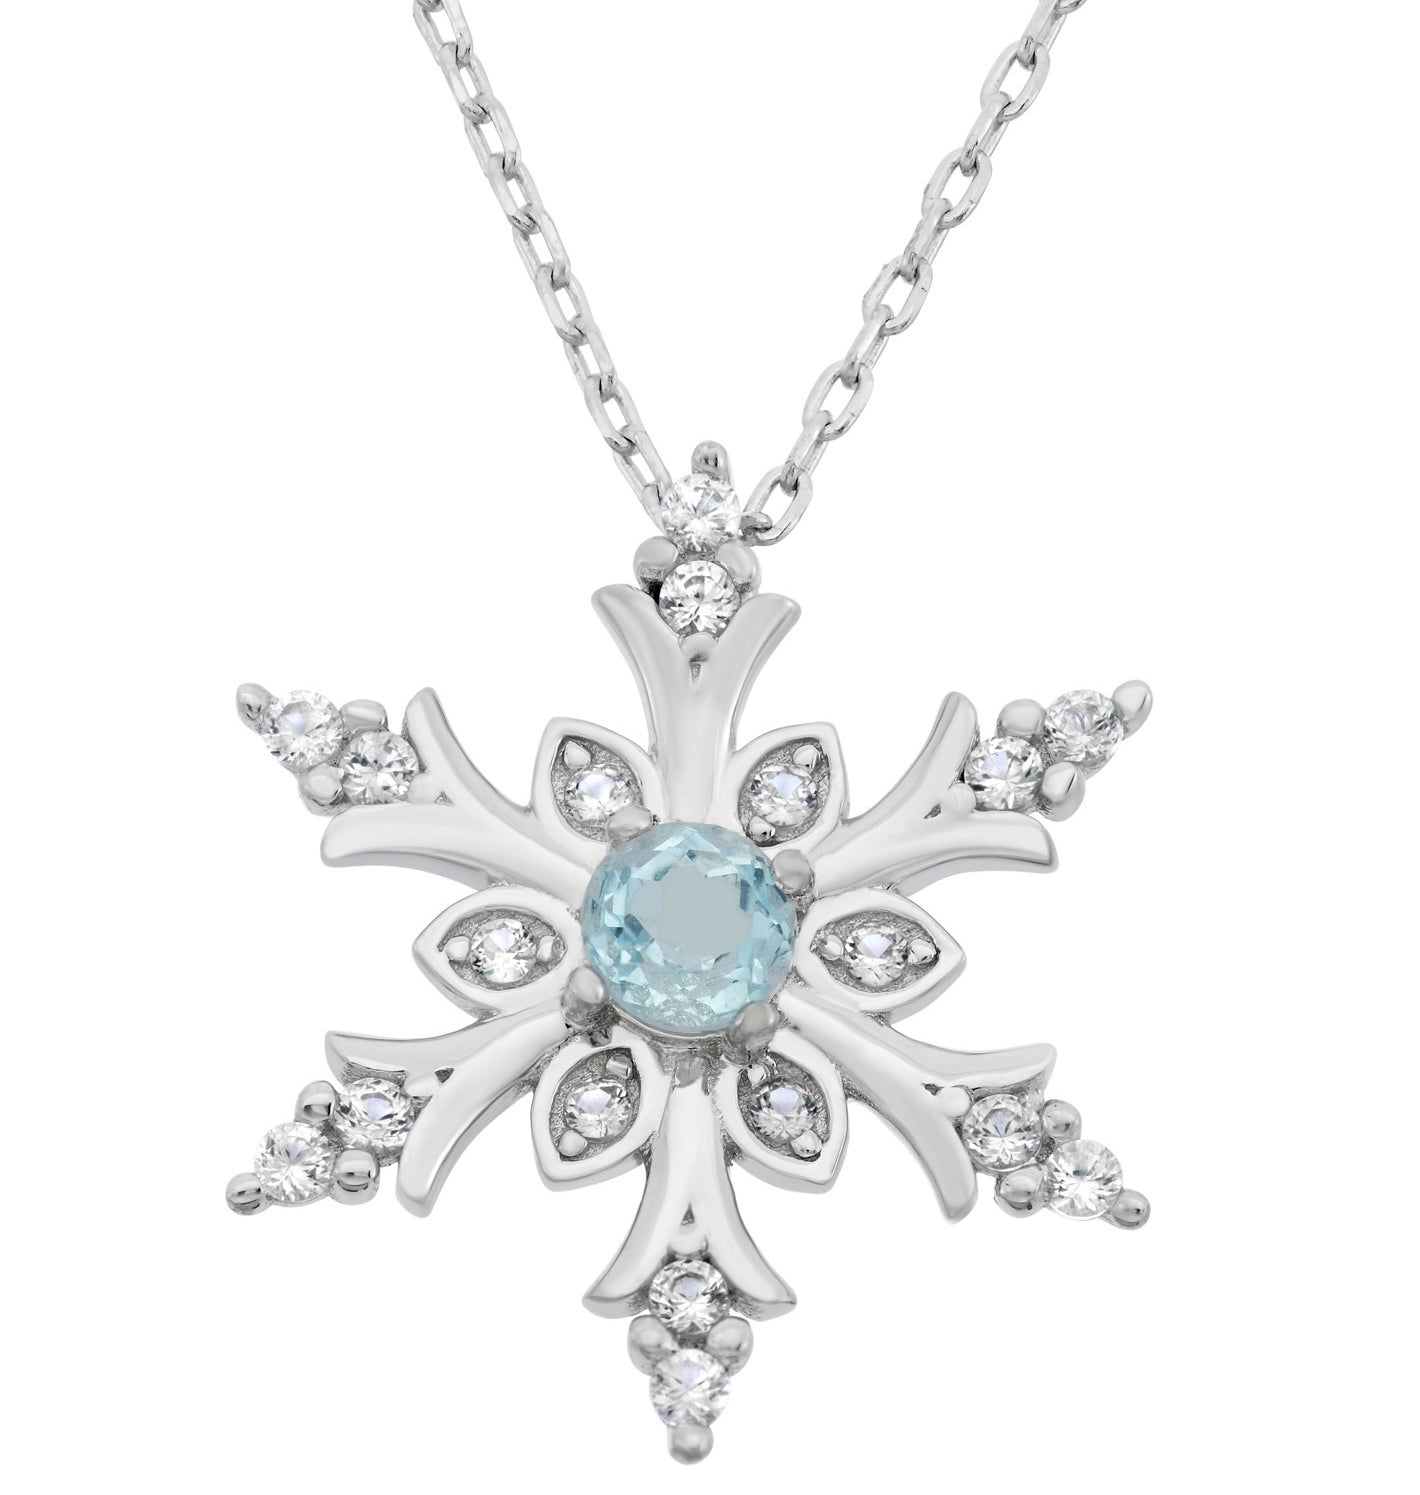 The snowflake pendant